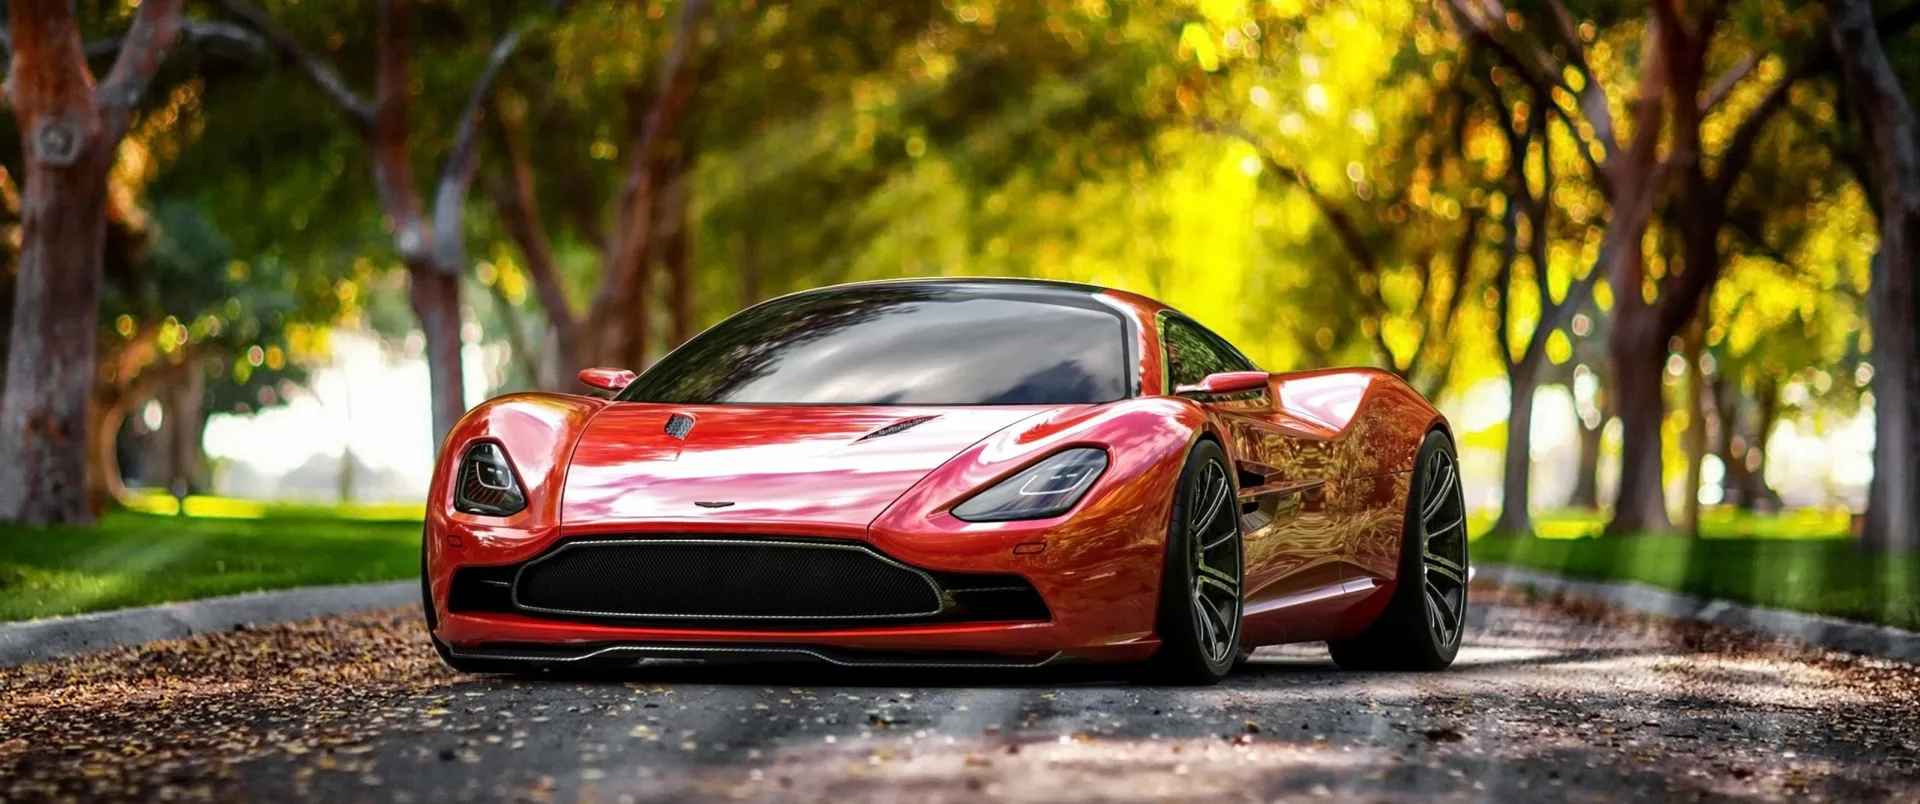 Aston Martin Hintergrundbilder